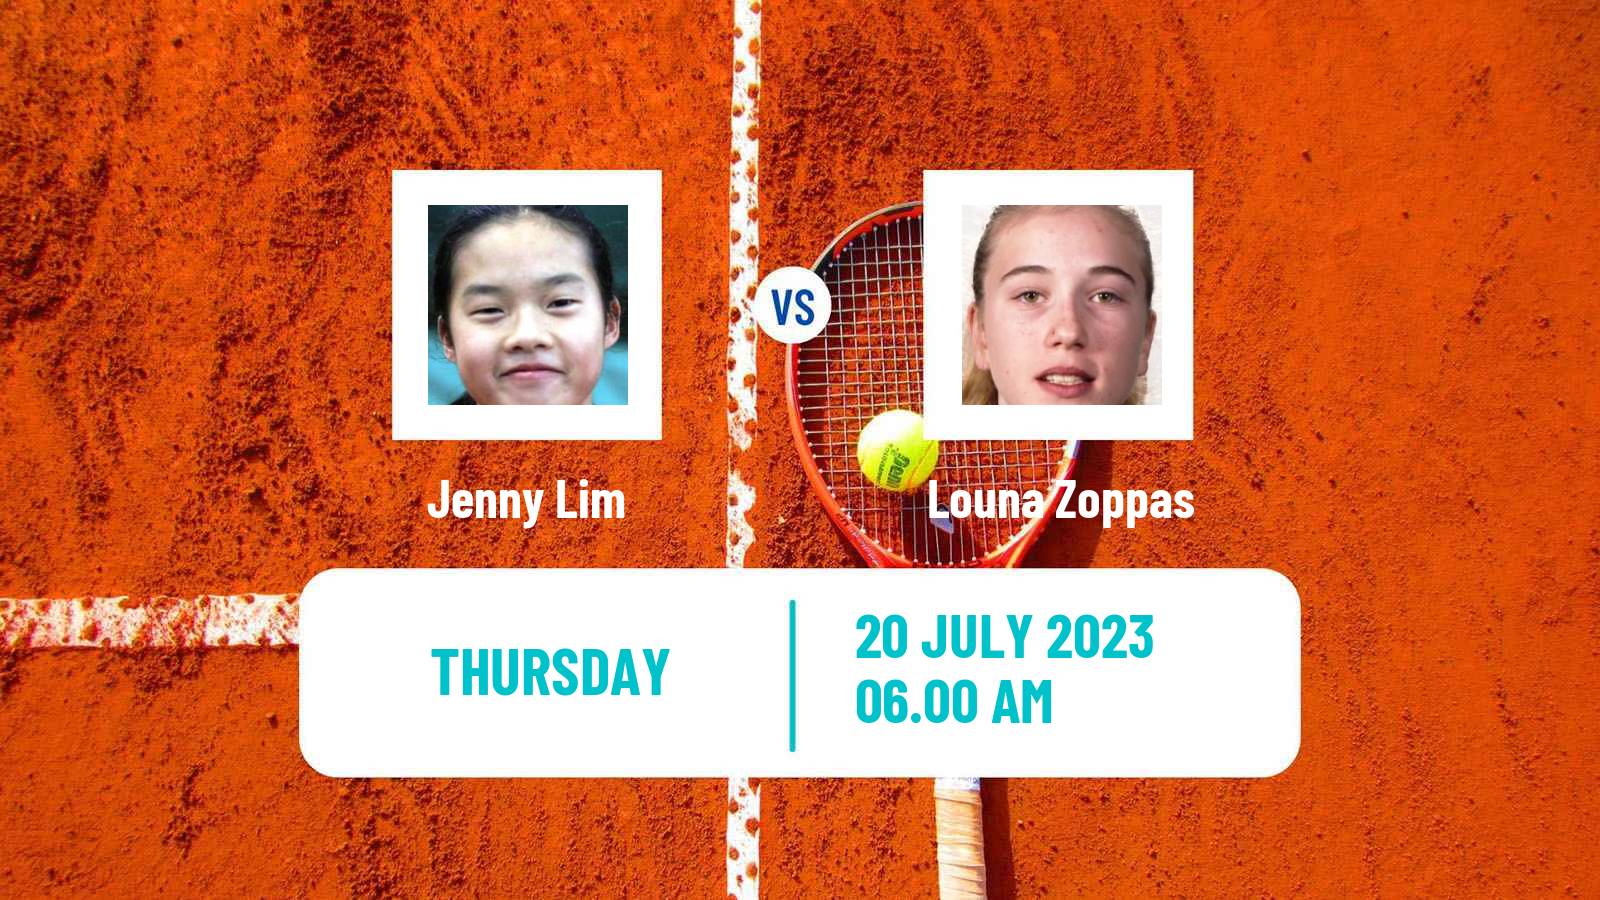 Tennis ITF W15 Les Contamines Montjoie Women Jenny Lim - Louna Zoppas